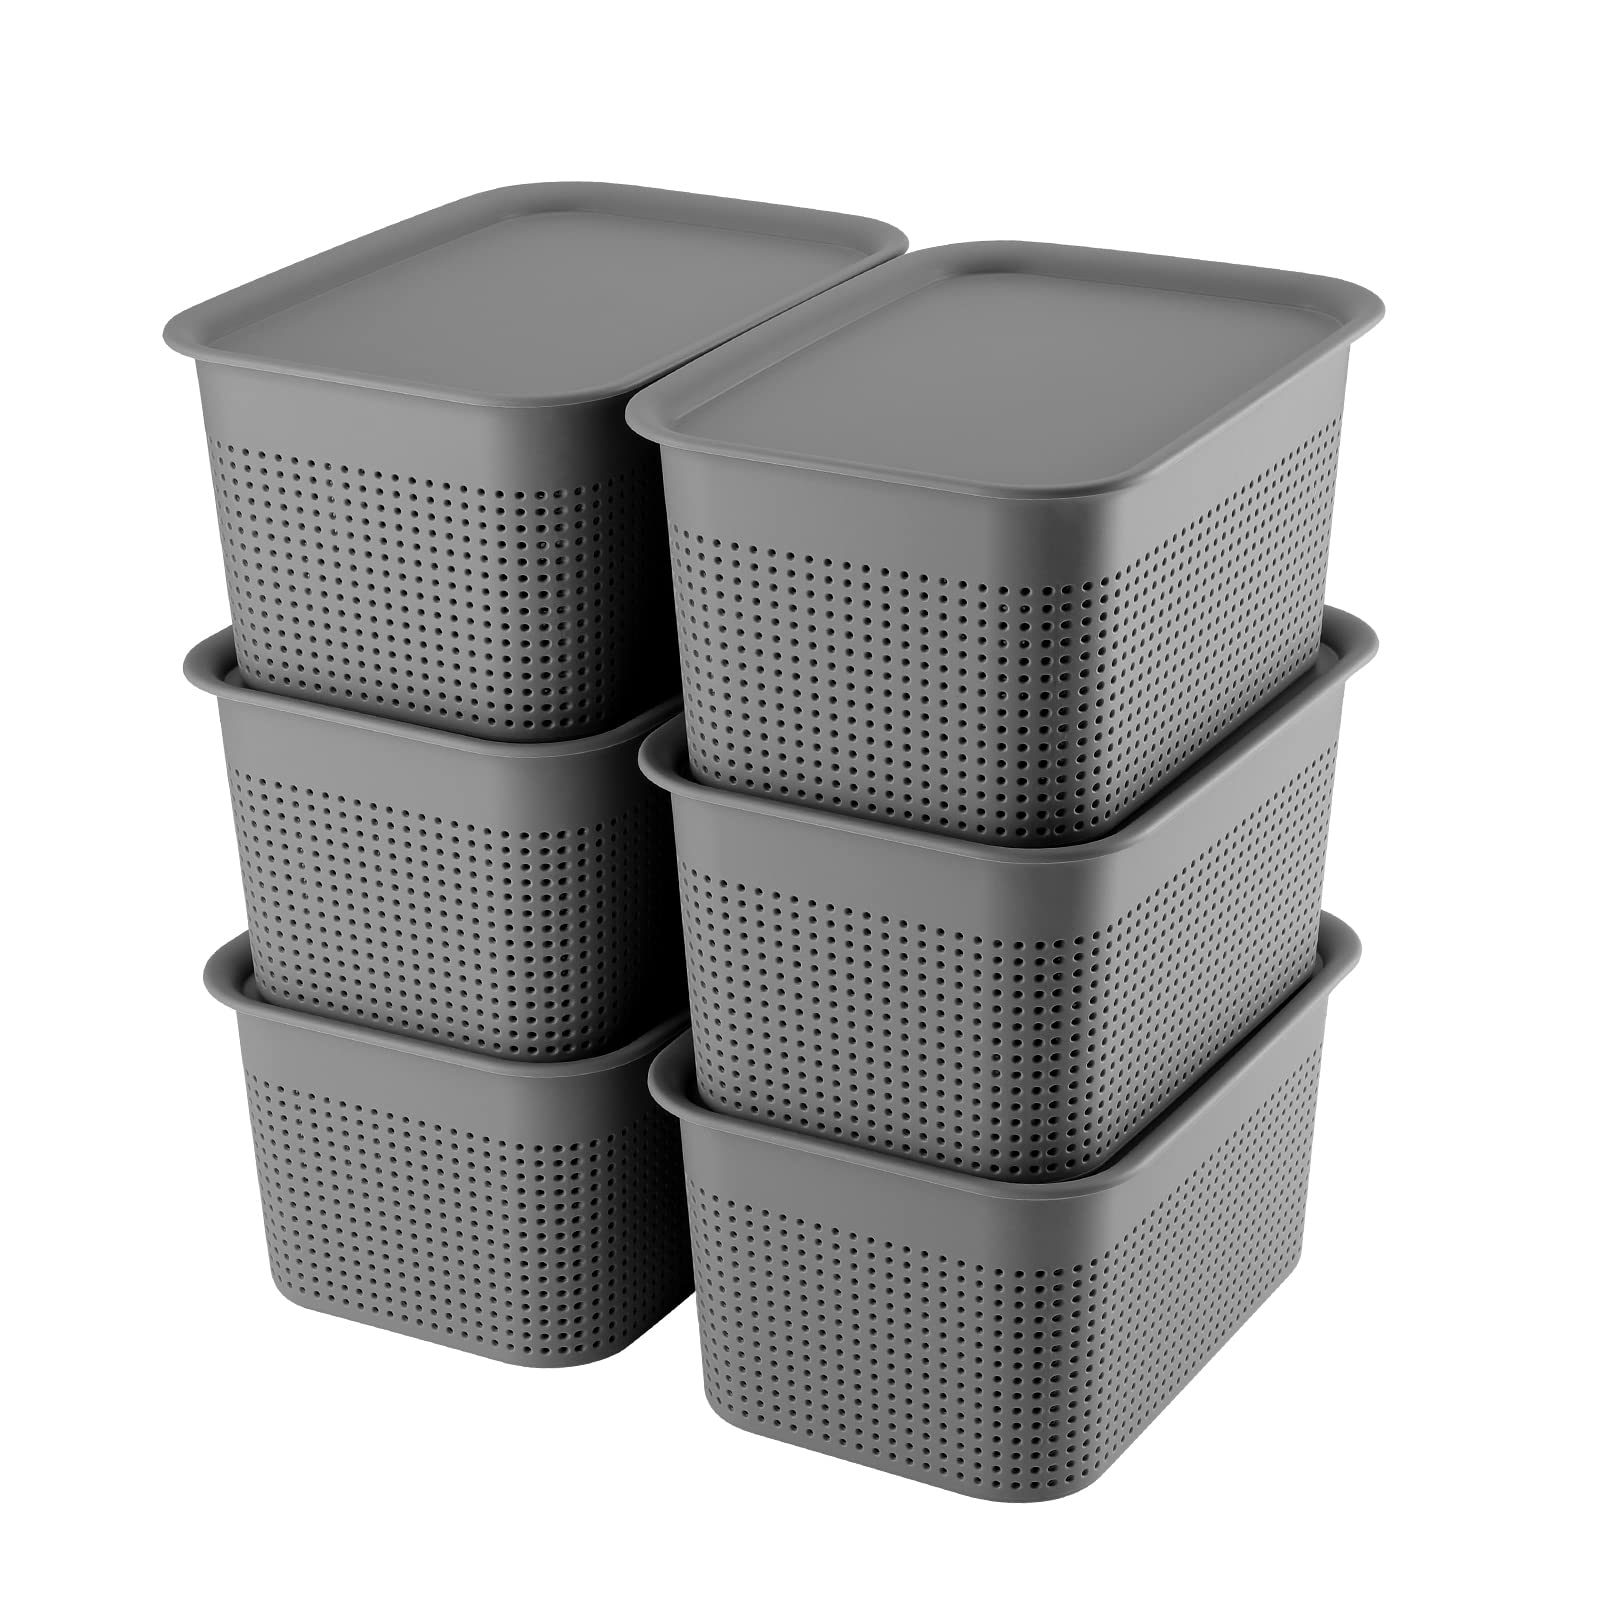 AREYZIN Plastic Storage Baskets with Lids Set of 6 Lidded Storage Organizer Bins Containers Baskets for Organizing Shelves Desktop Closet Playroom